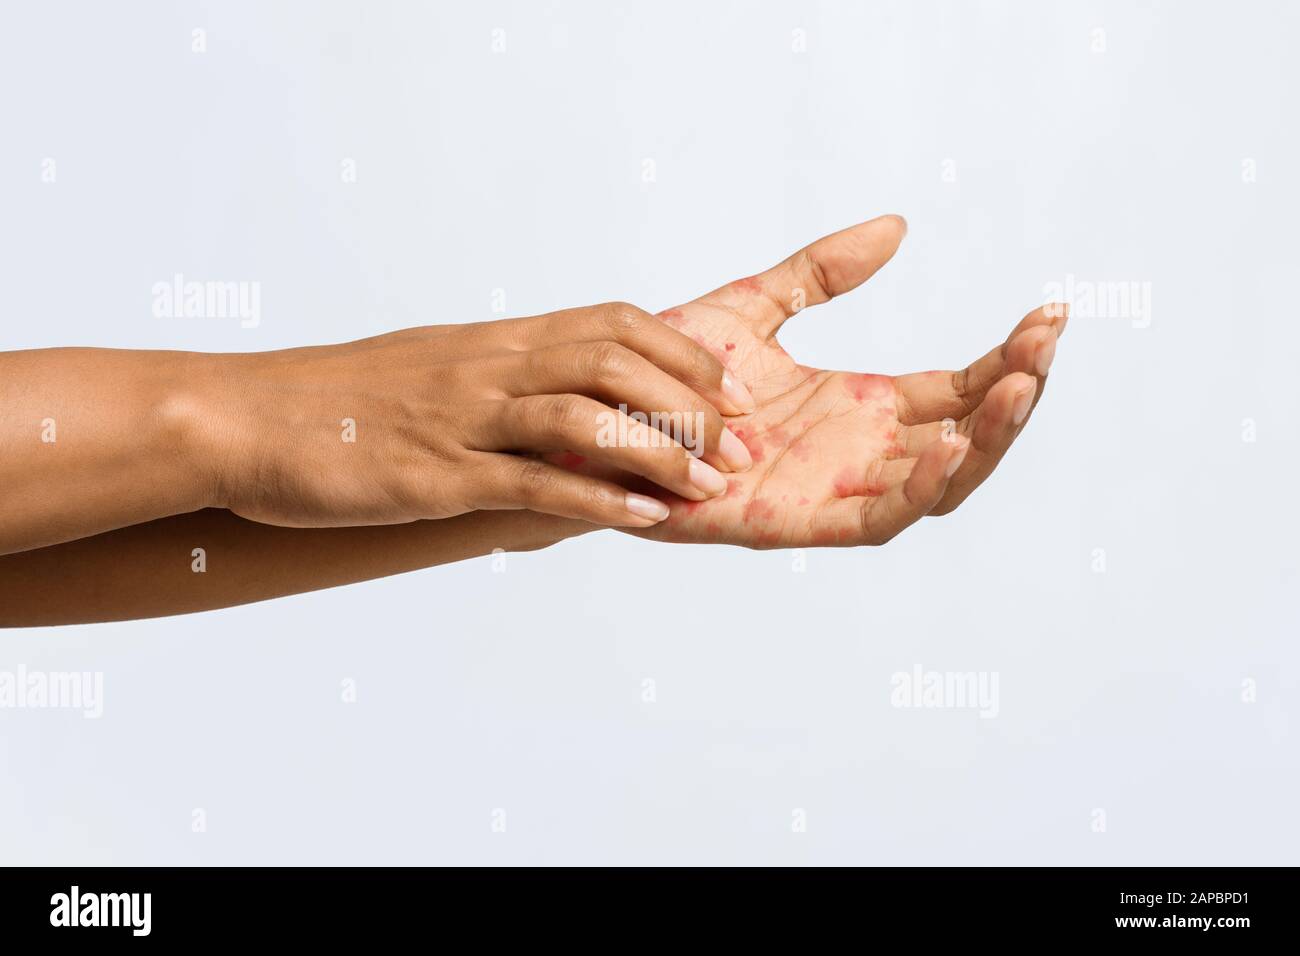 Afro woman having eczema on her palm Stock Photo